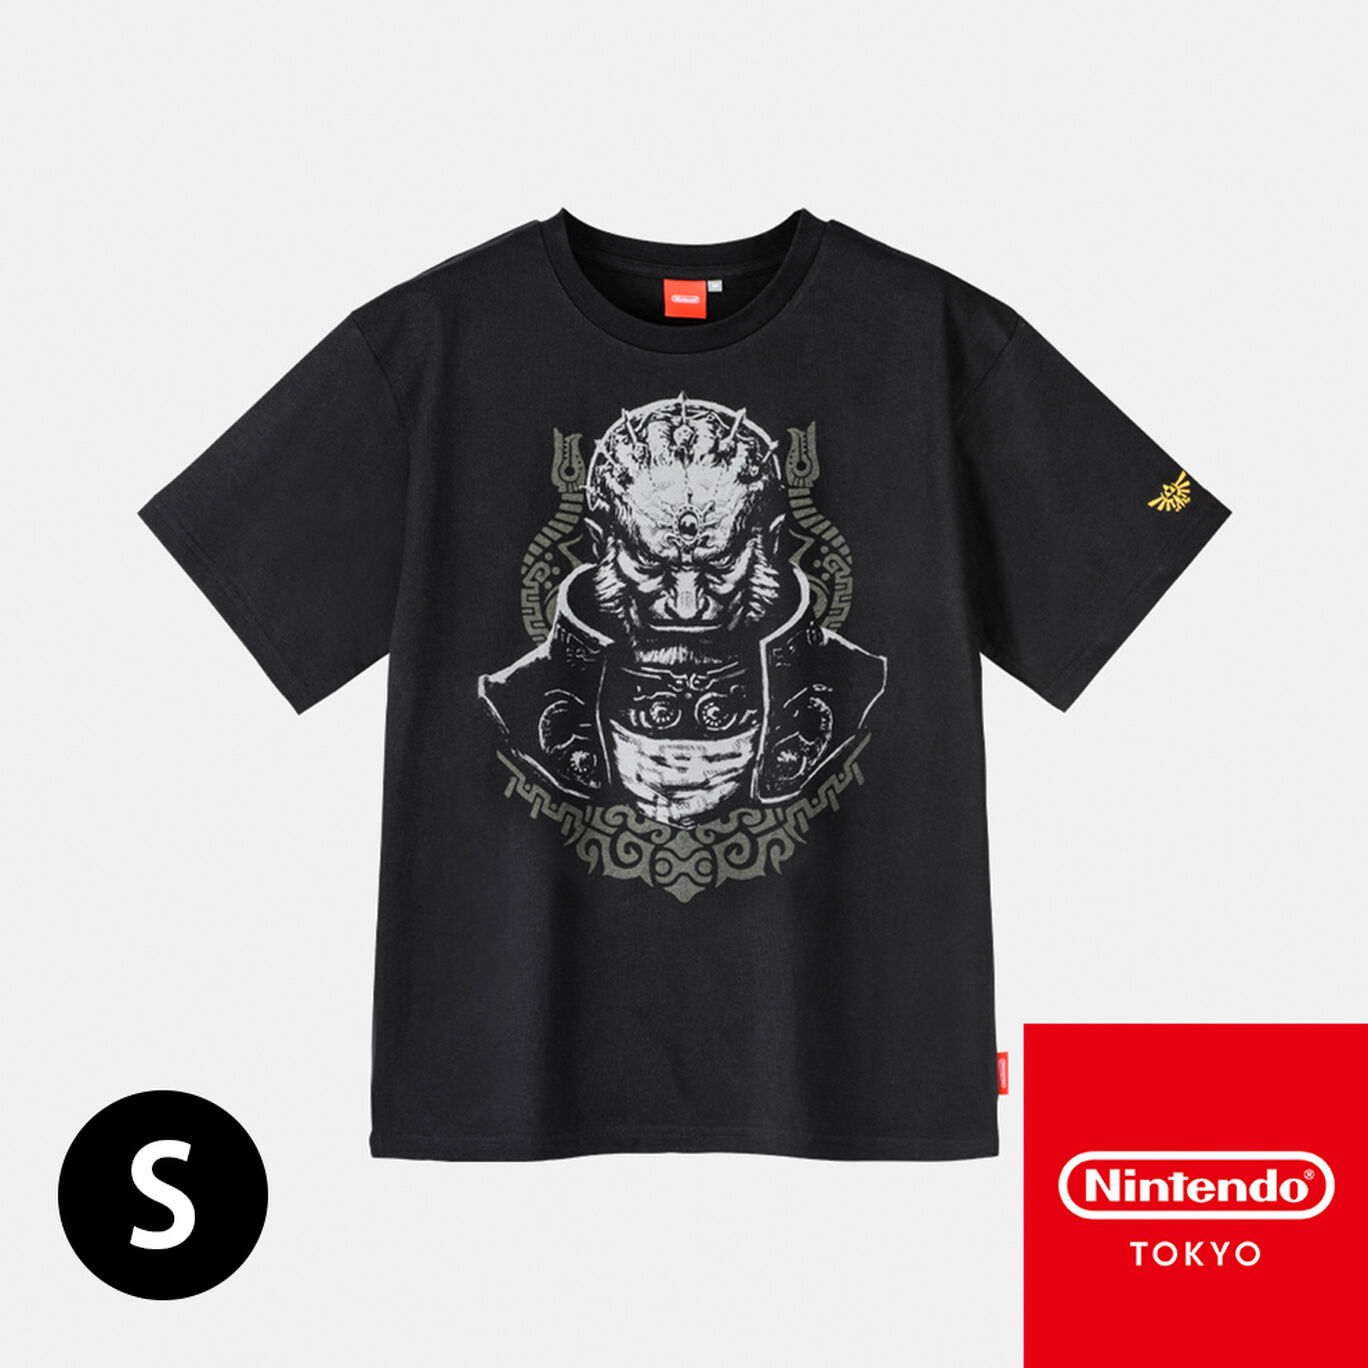 Tシャツ トライフォース ガノンドロフ S ゼルダの伝説【Nintendo TOKYO取り扱い商品】